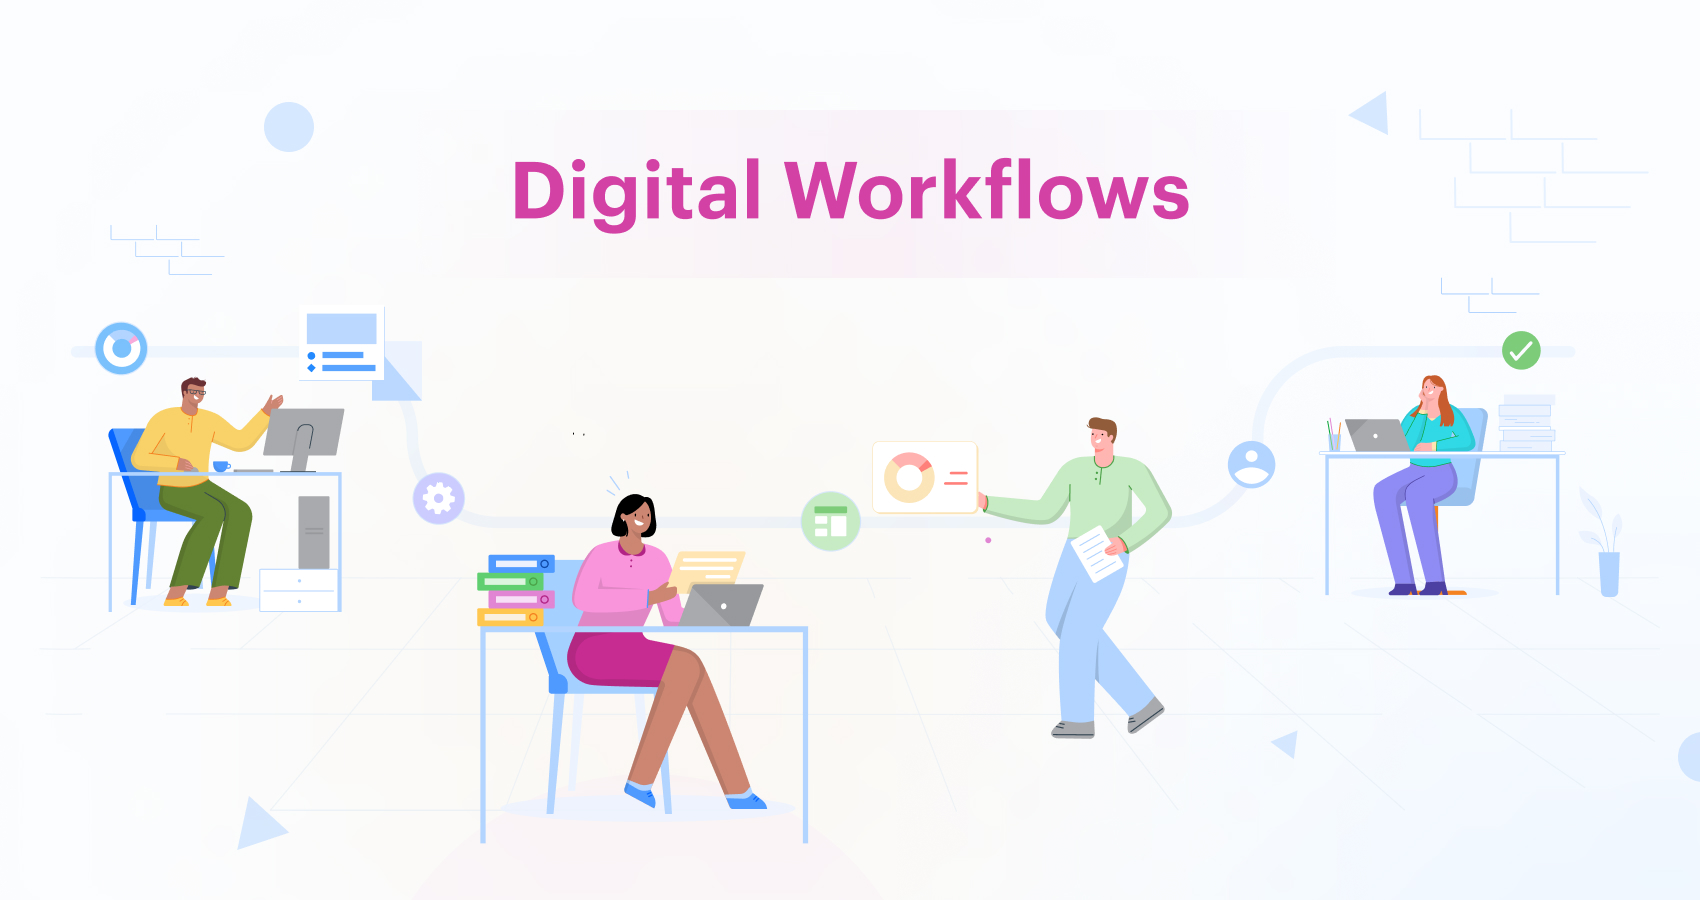 Digital Workflows